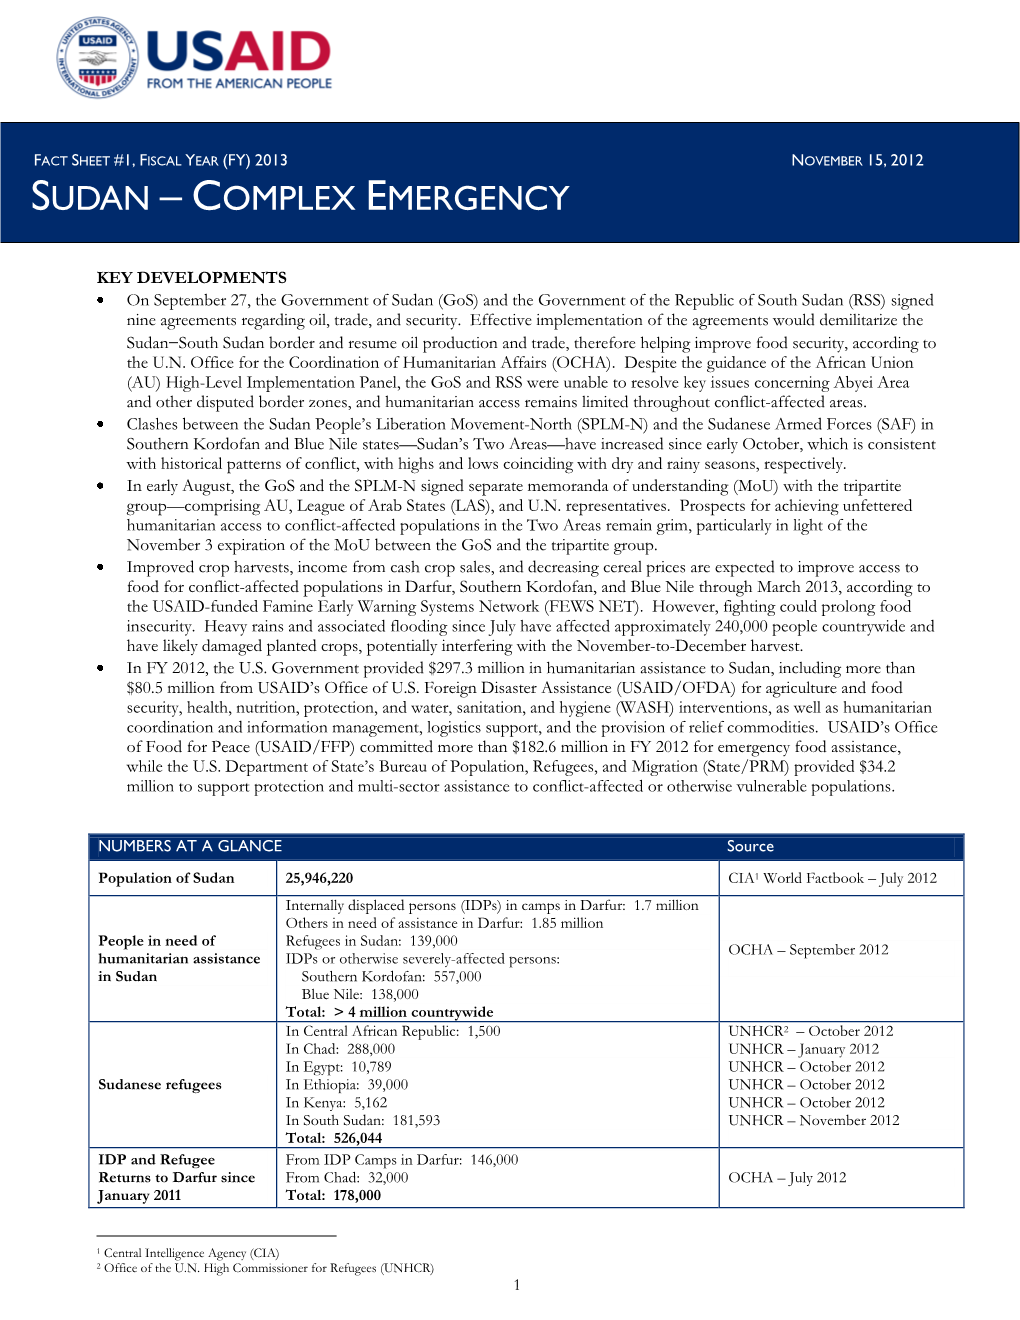 USAID Sudan Complex Emergency Fact Sheet #1 11/15/2012